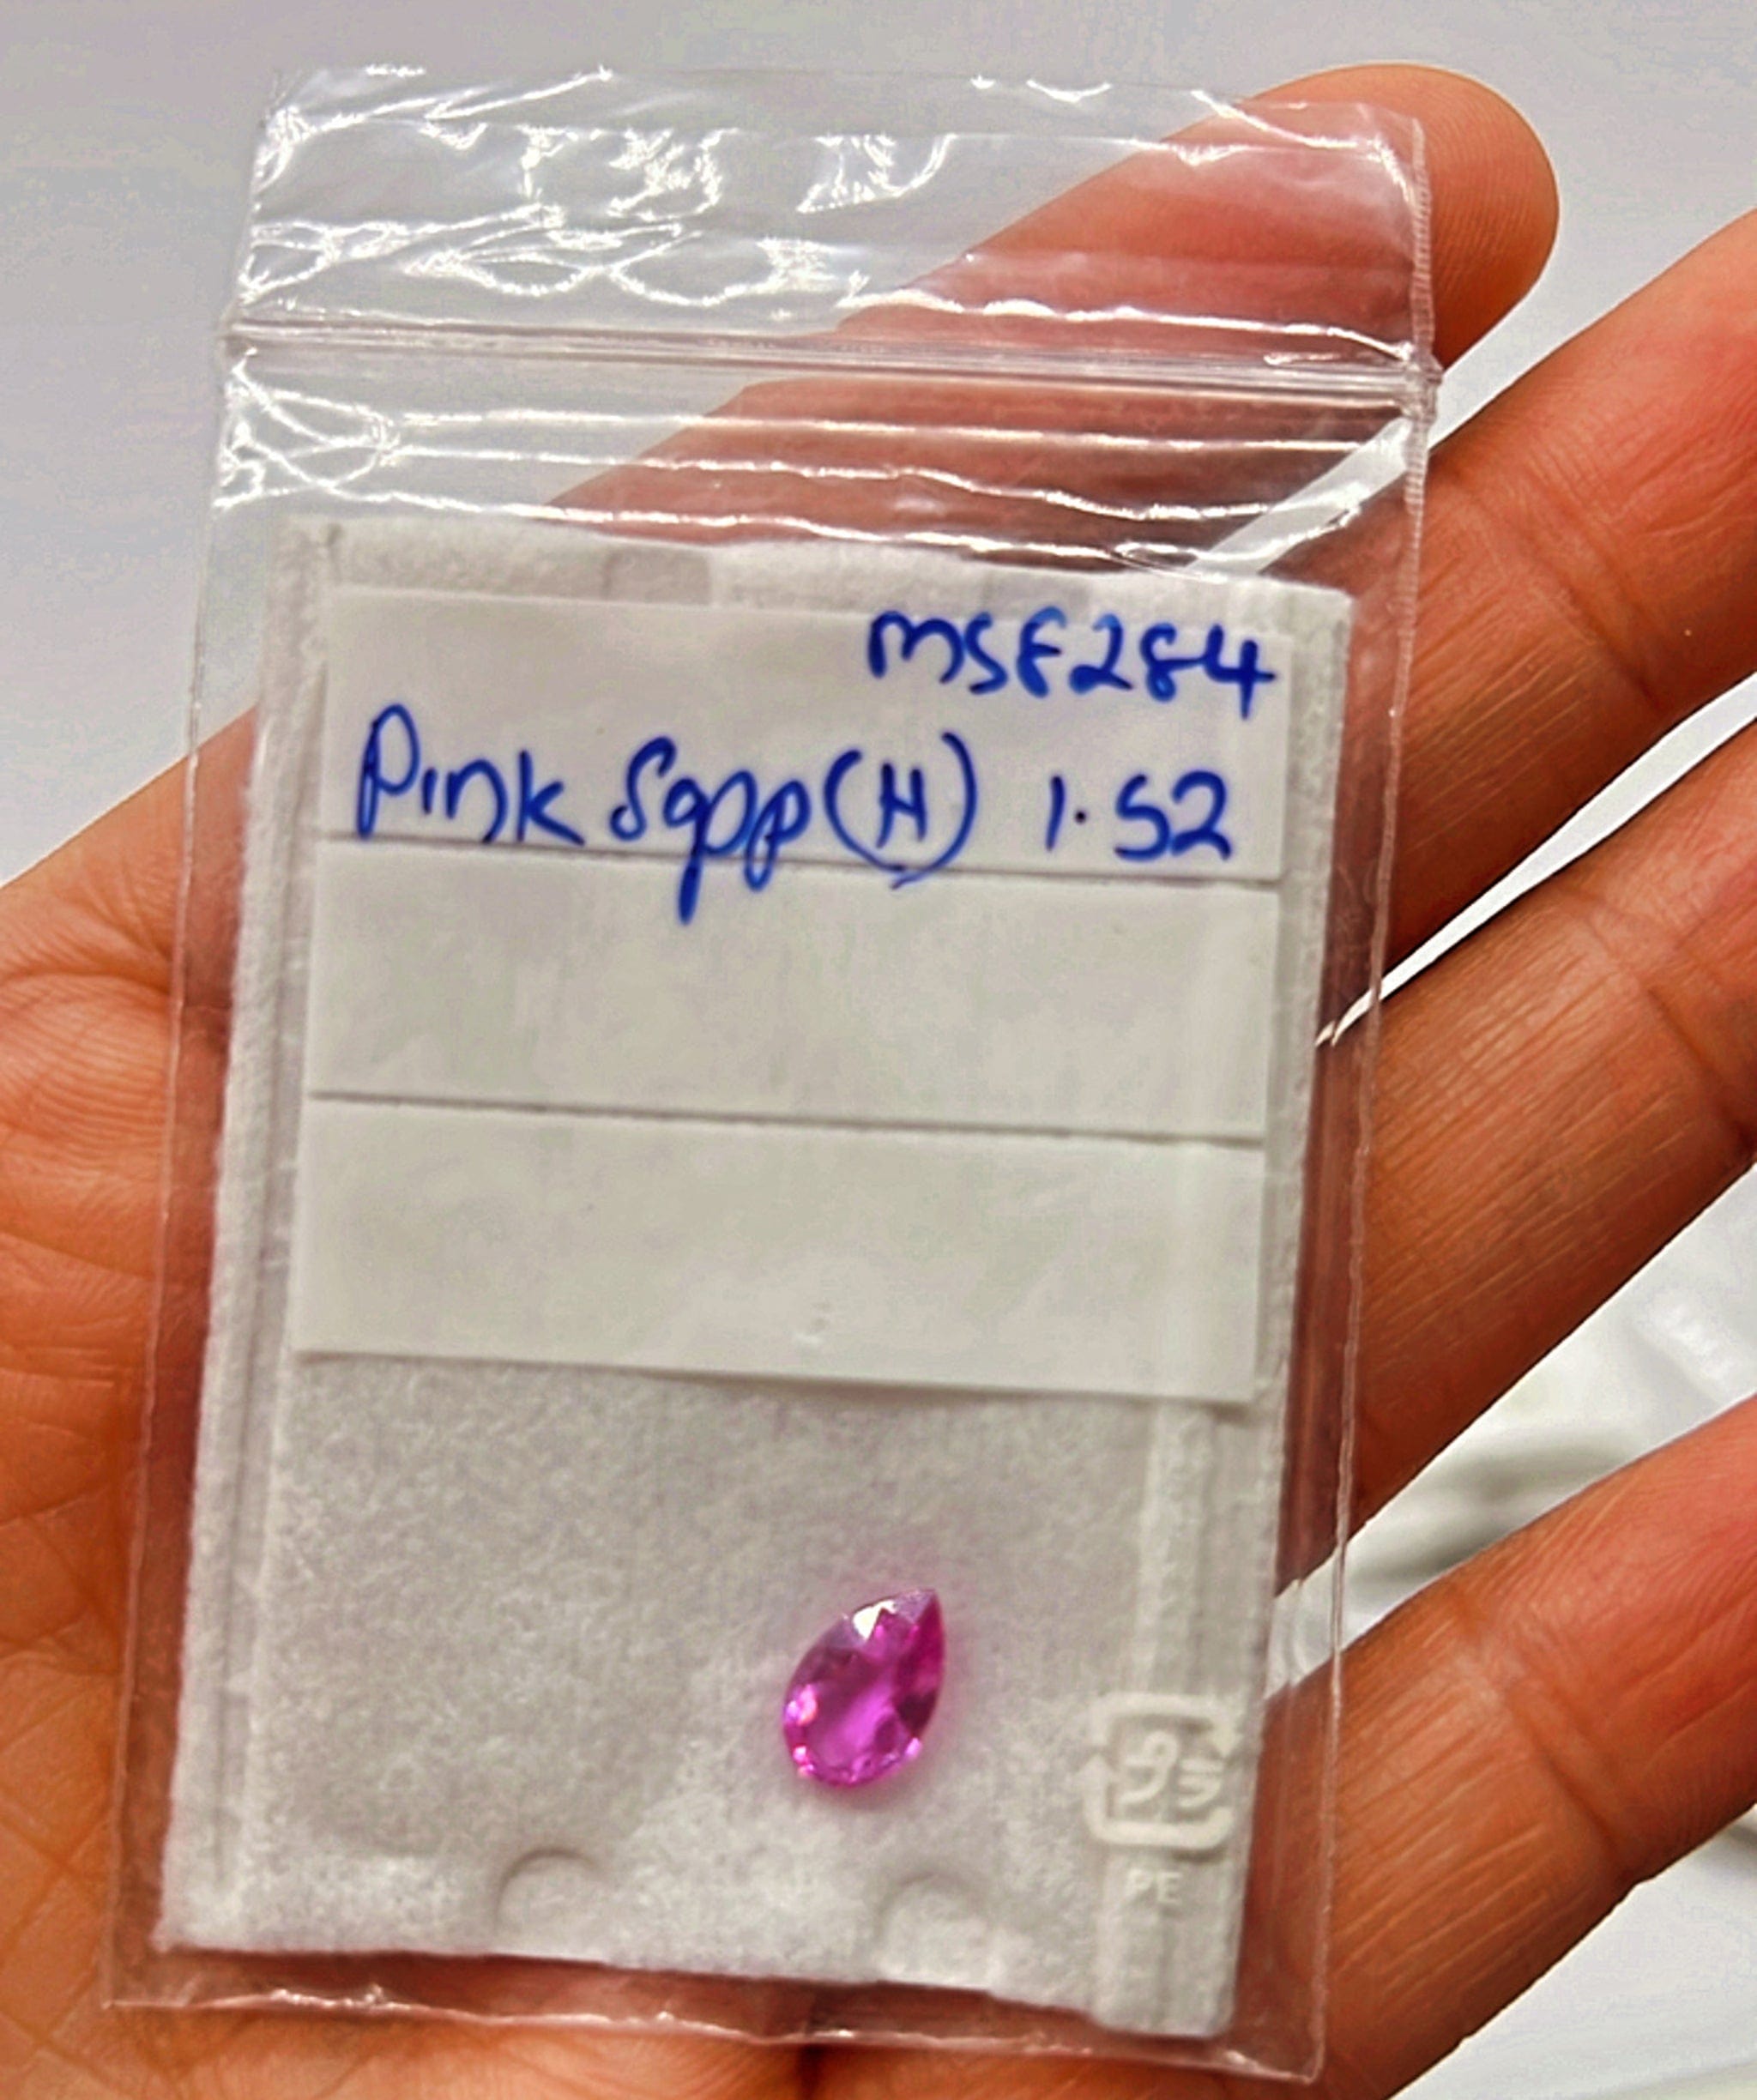 Luxury Promise Pink Sapphire (HN) 1.52 MS 8284